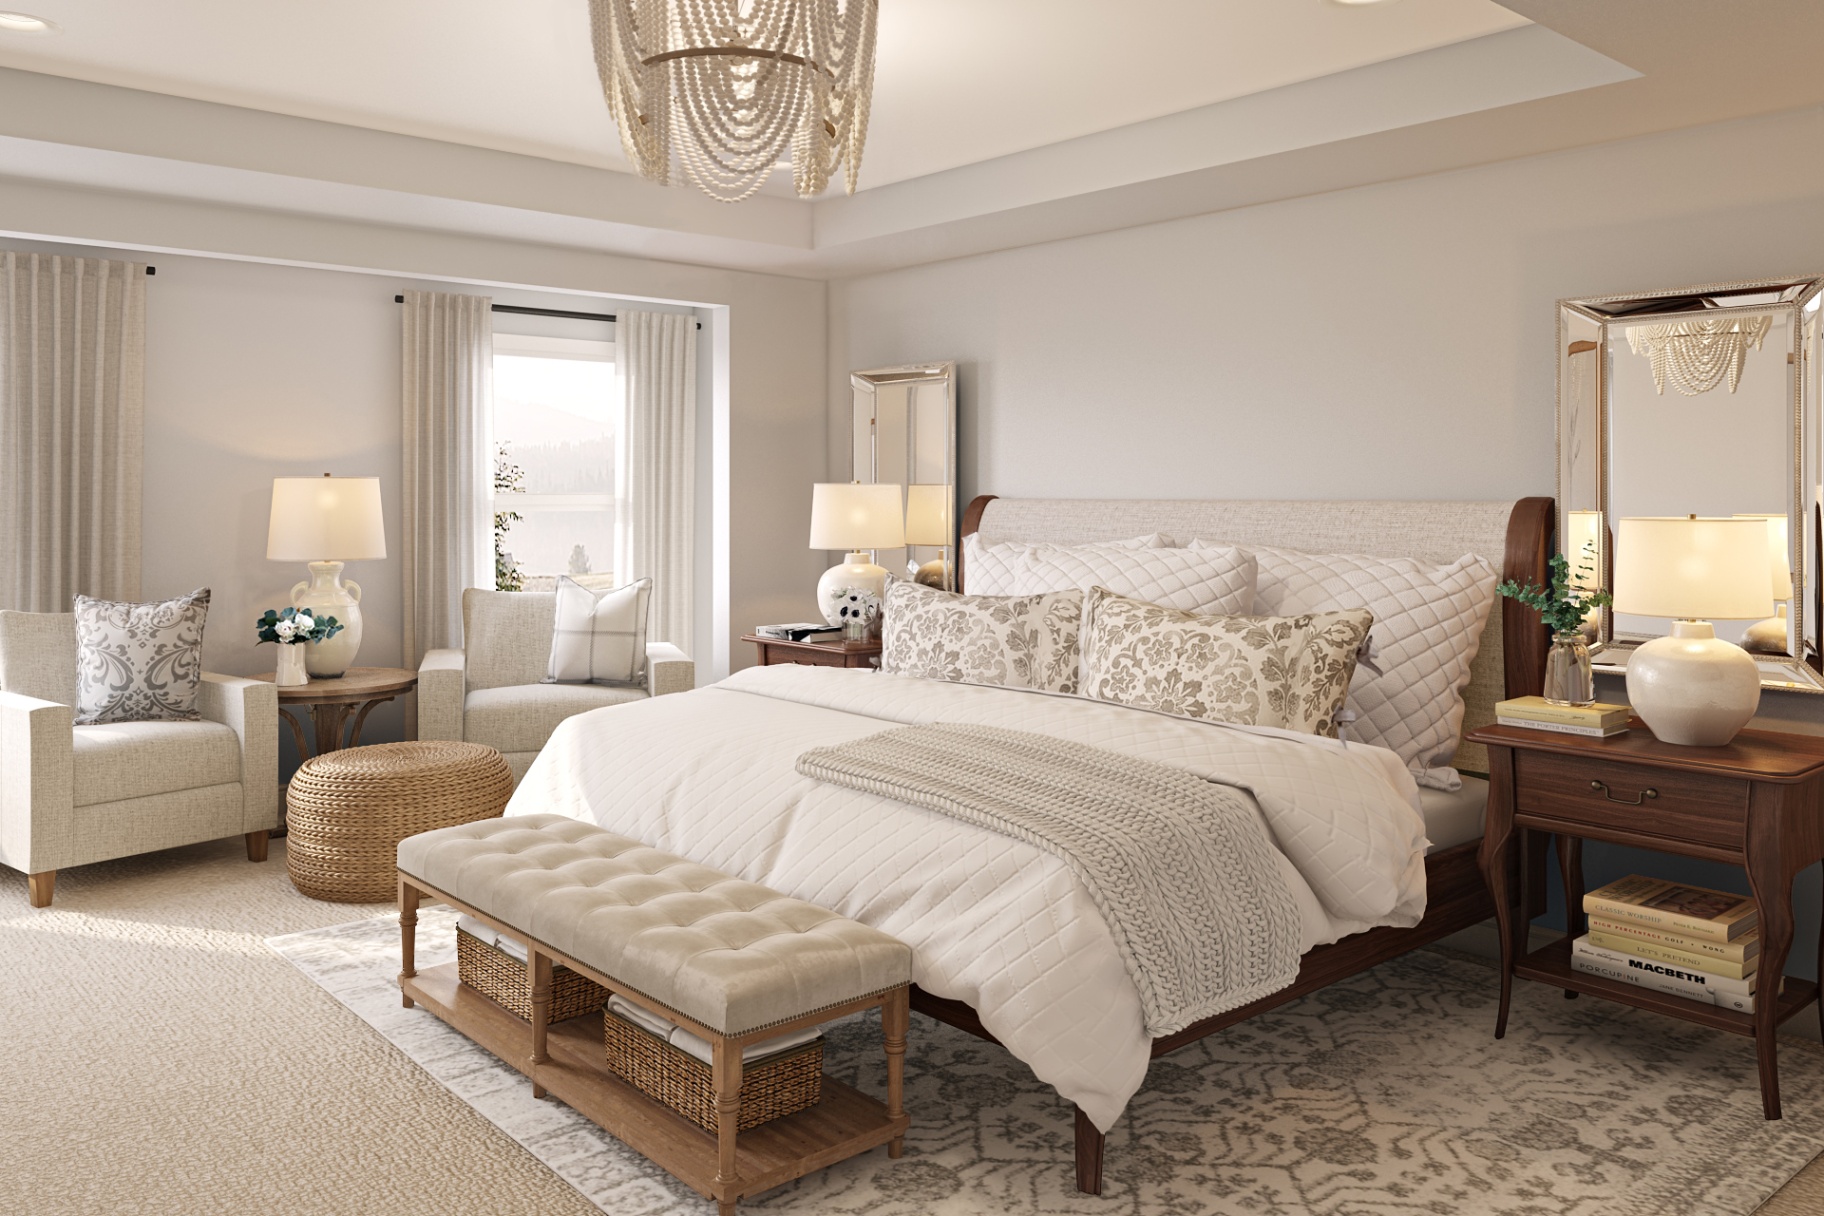 10 Cozy Bedroom Design Ideas To Create Your Dream Retreat